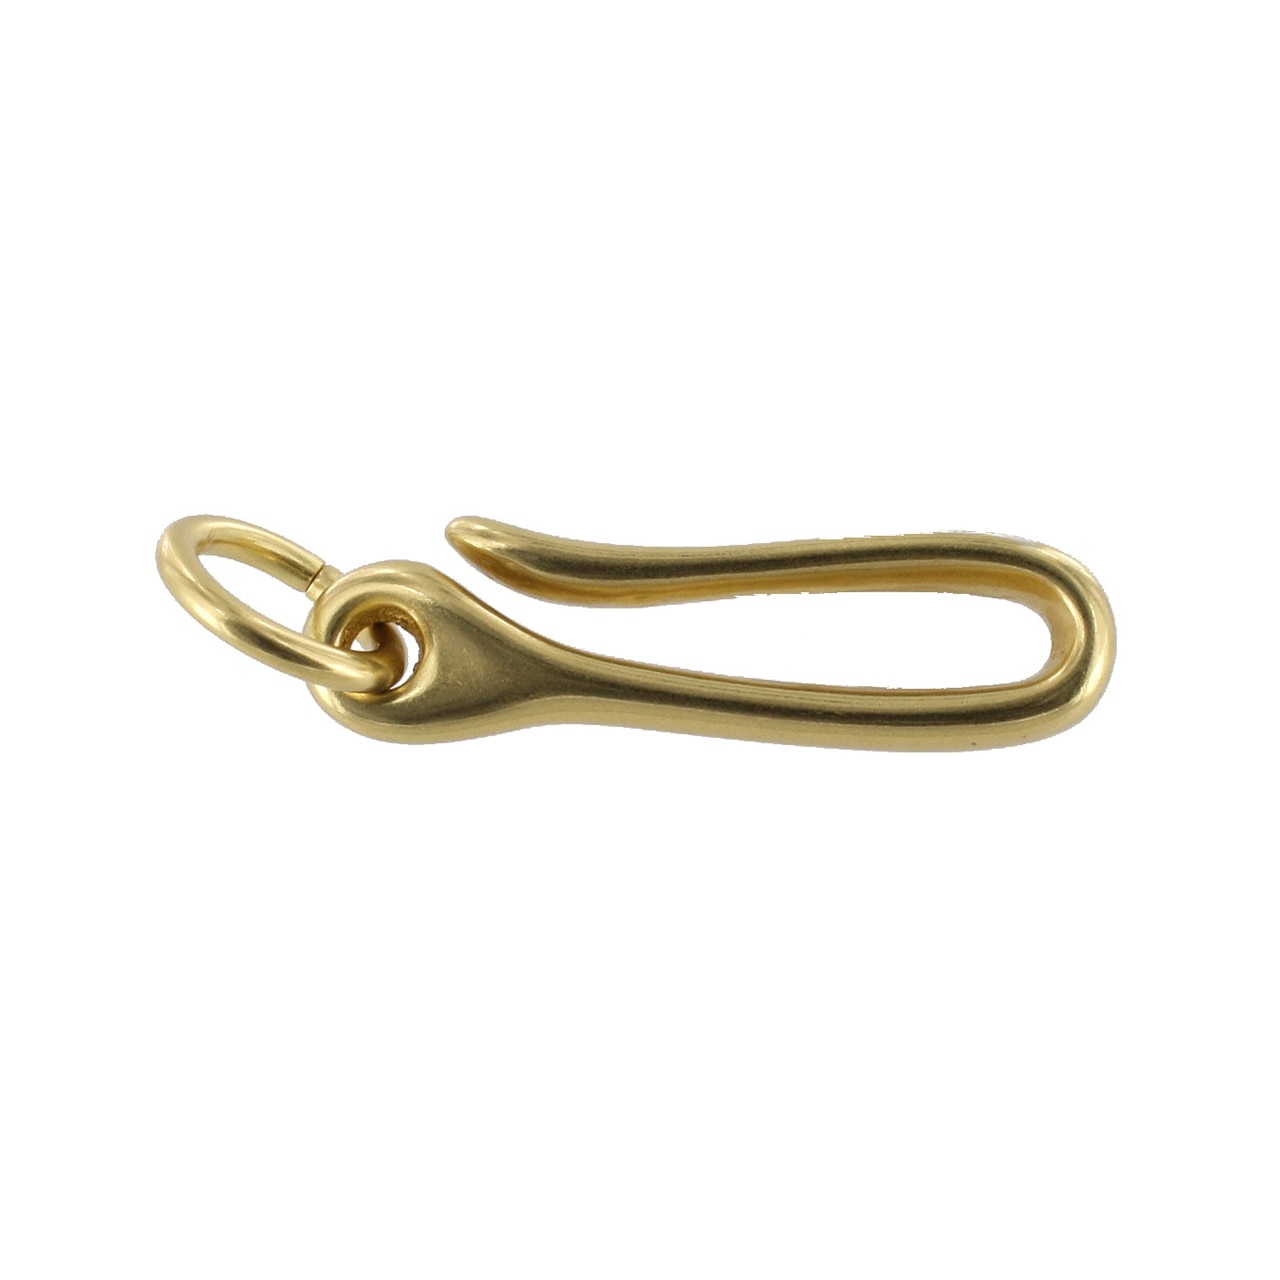 Mens Hook Key Chain / Brass or Nickel Hook / Fish Hook / Key Ring / Belt  Hook / Metal Key Chain / Gold Silver Key Chain / Mens Style Fashion 